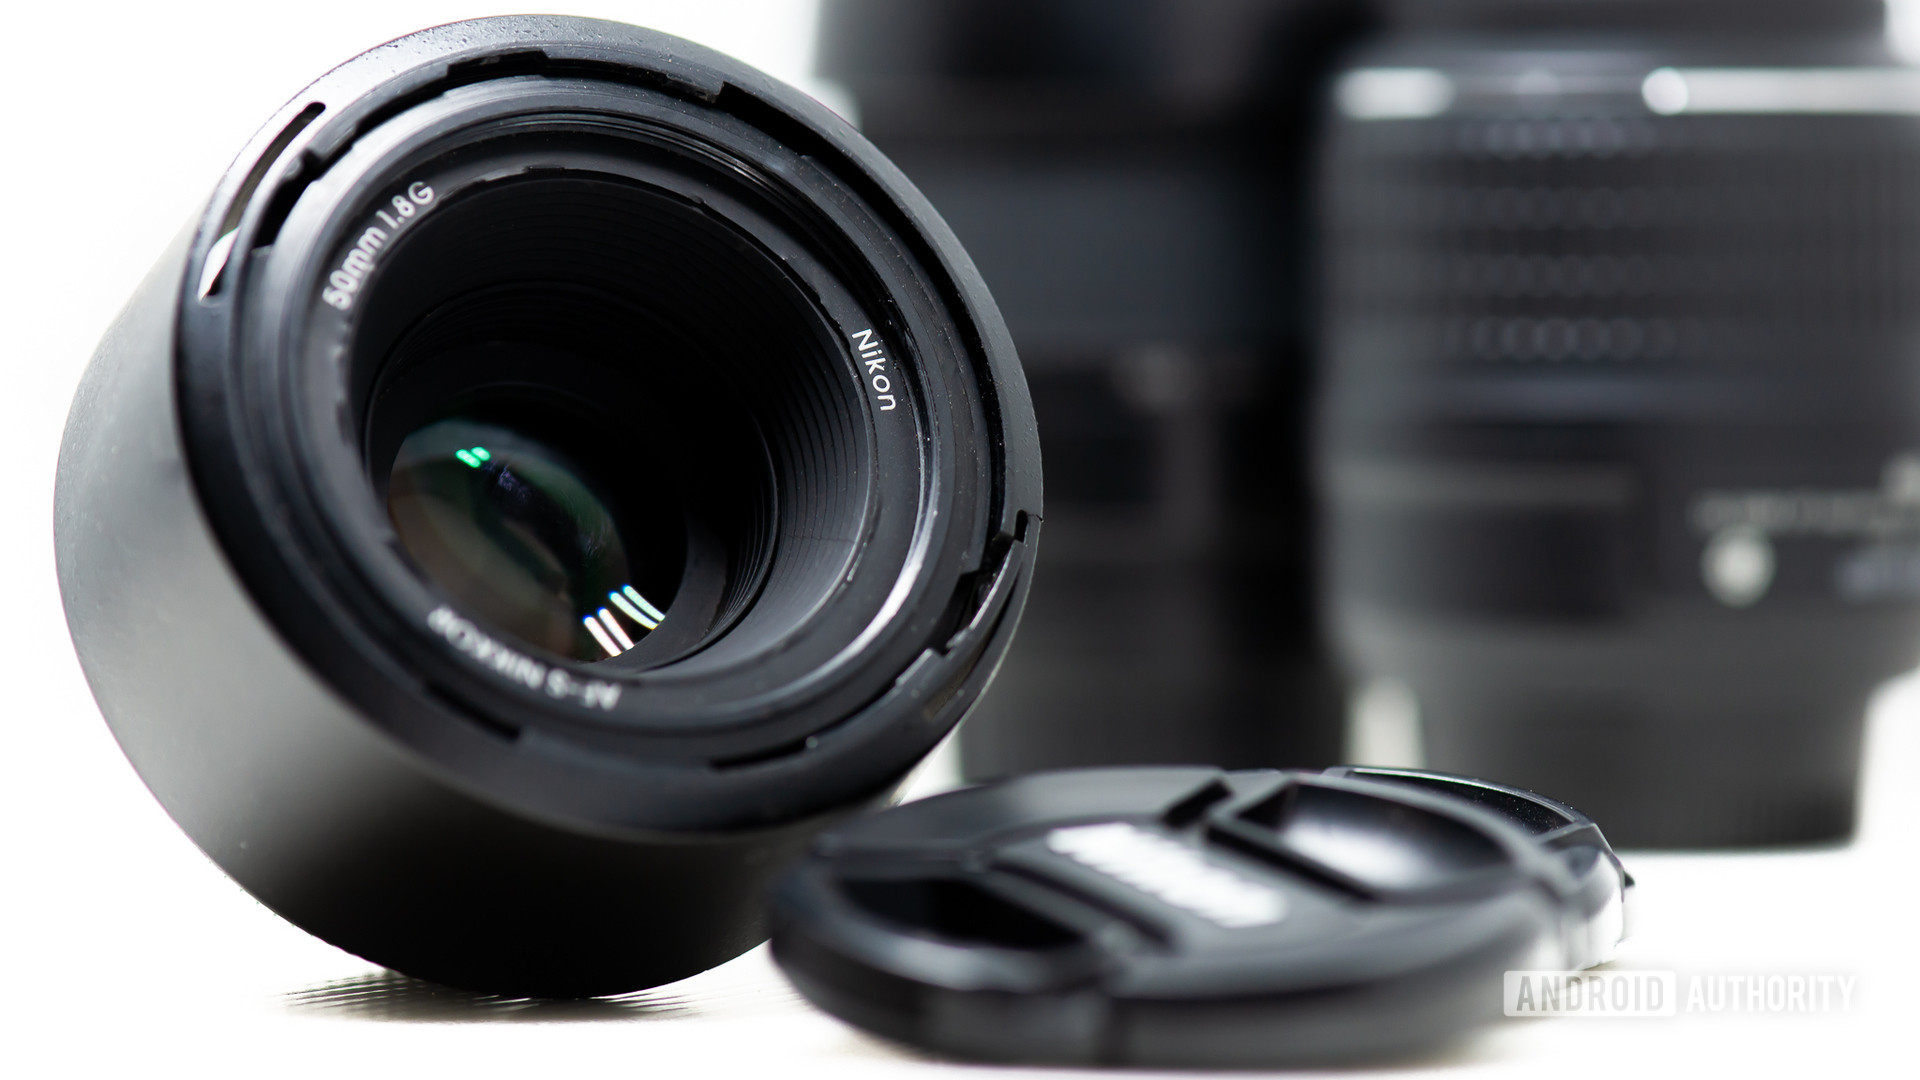 Nikon dslr lenses photography gear